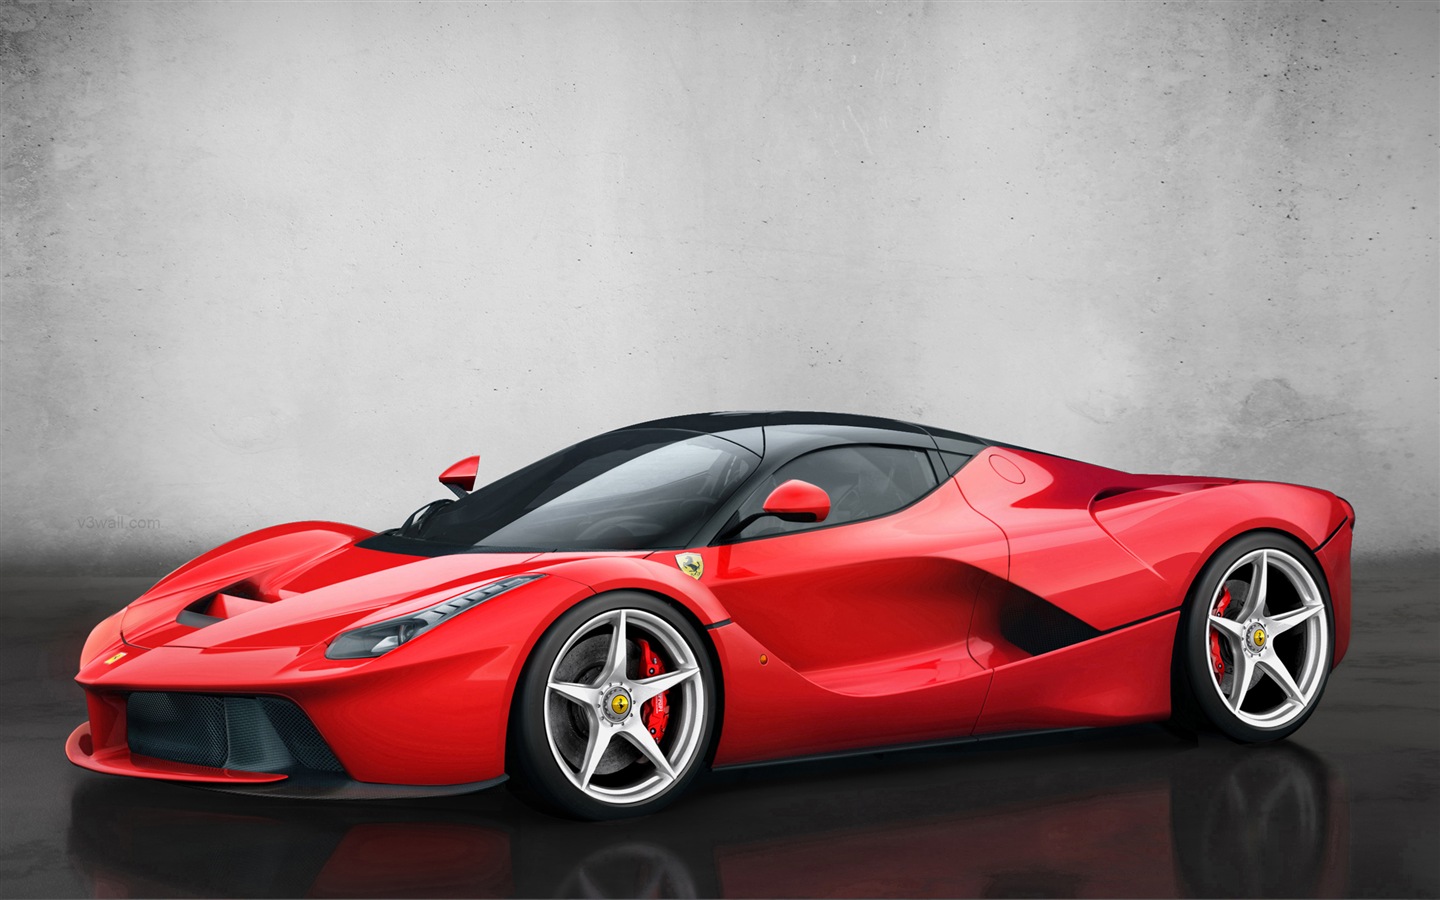 2013 Ferrari LaFerrari 法拉利LaFerrari红色超级跑车高清壁纸7 - 1440x900